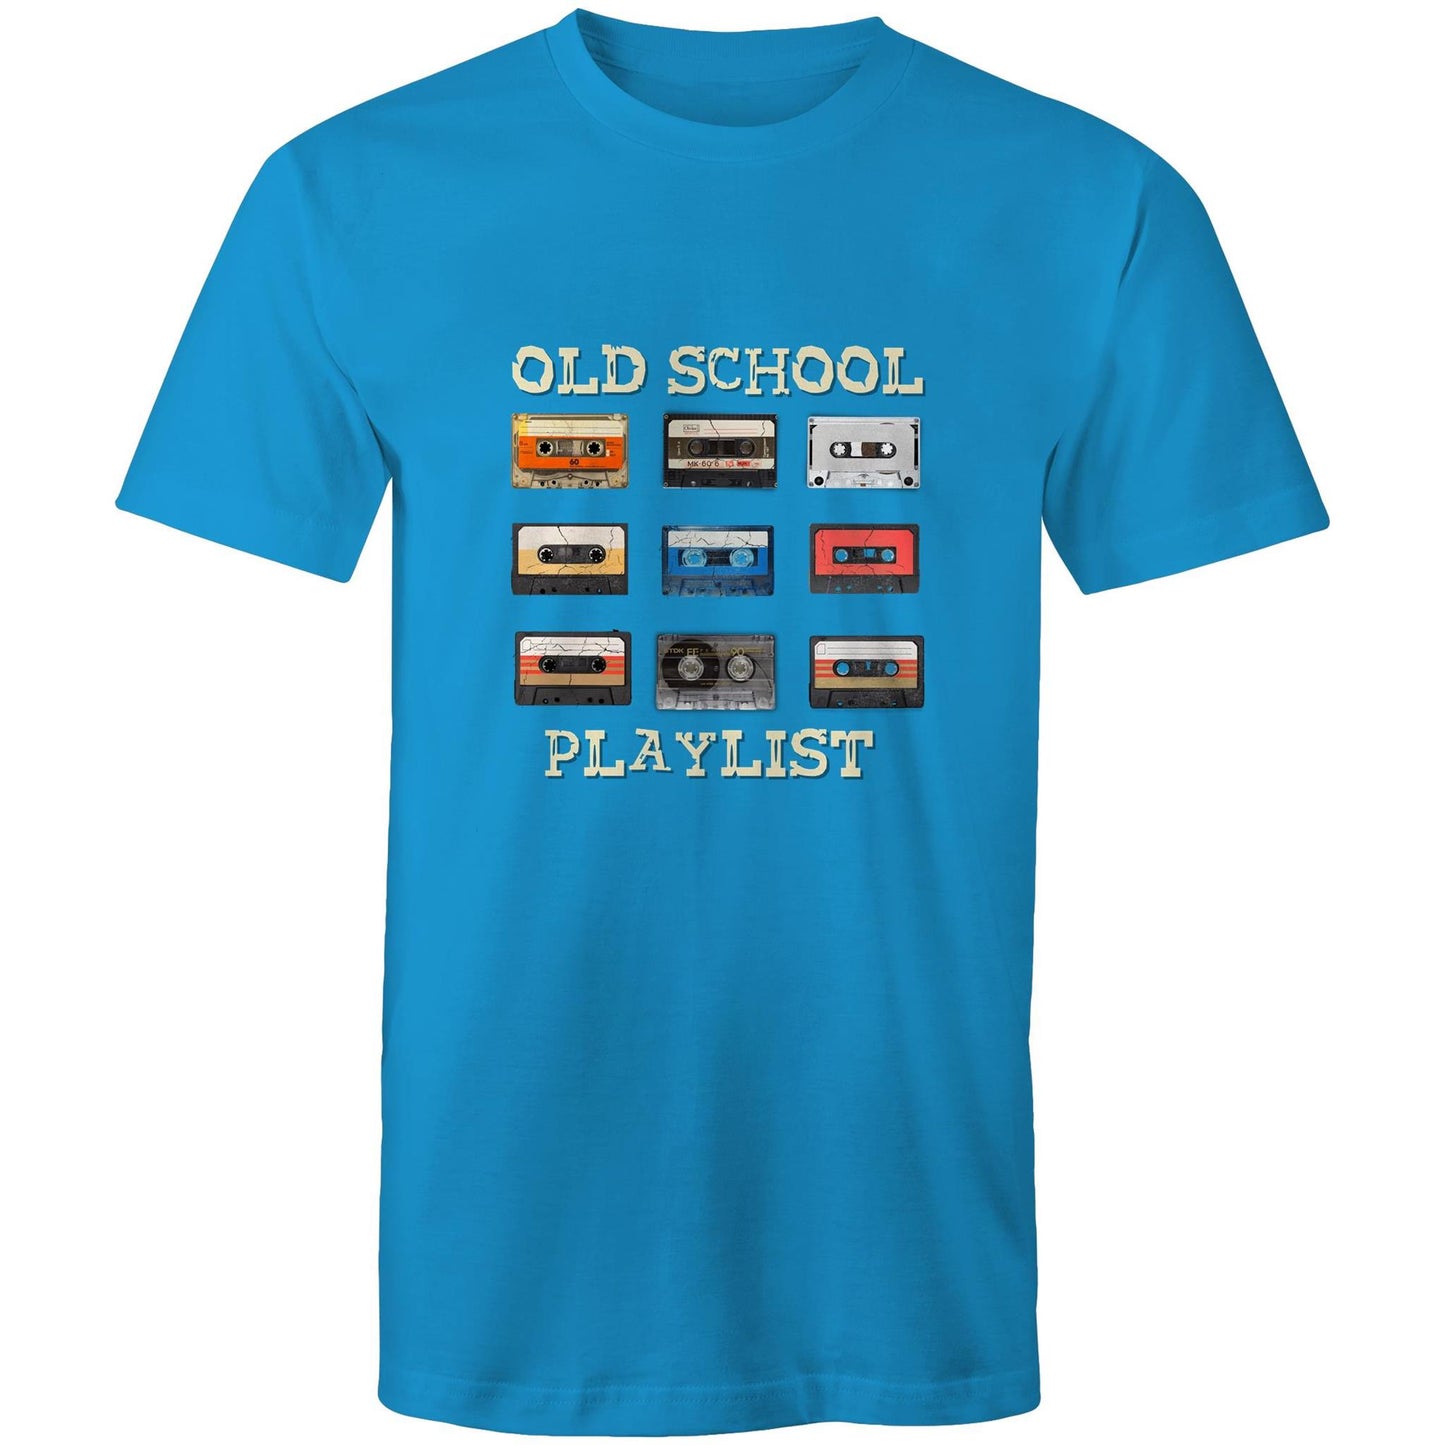 OLD SCHOOL Mens T-Shirt